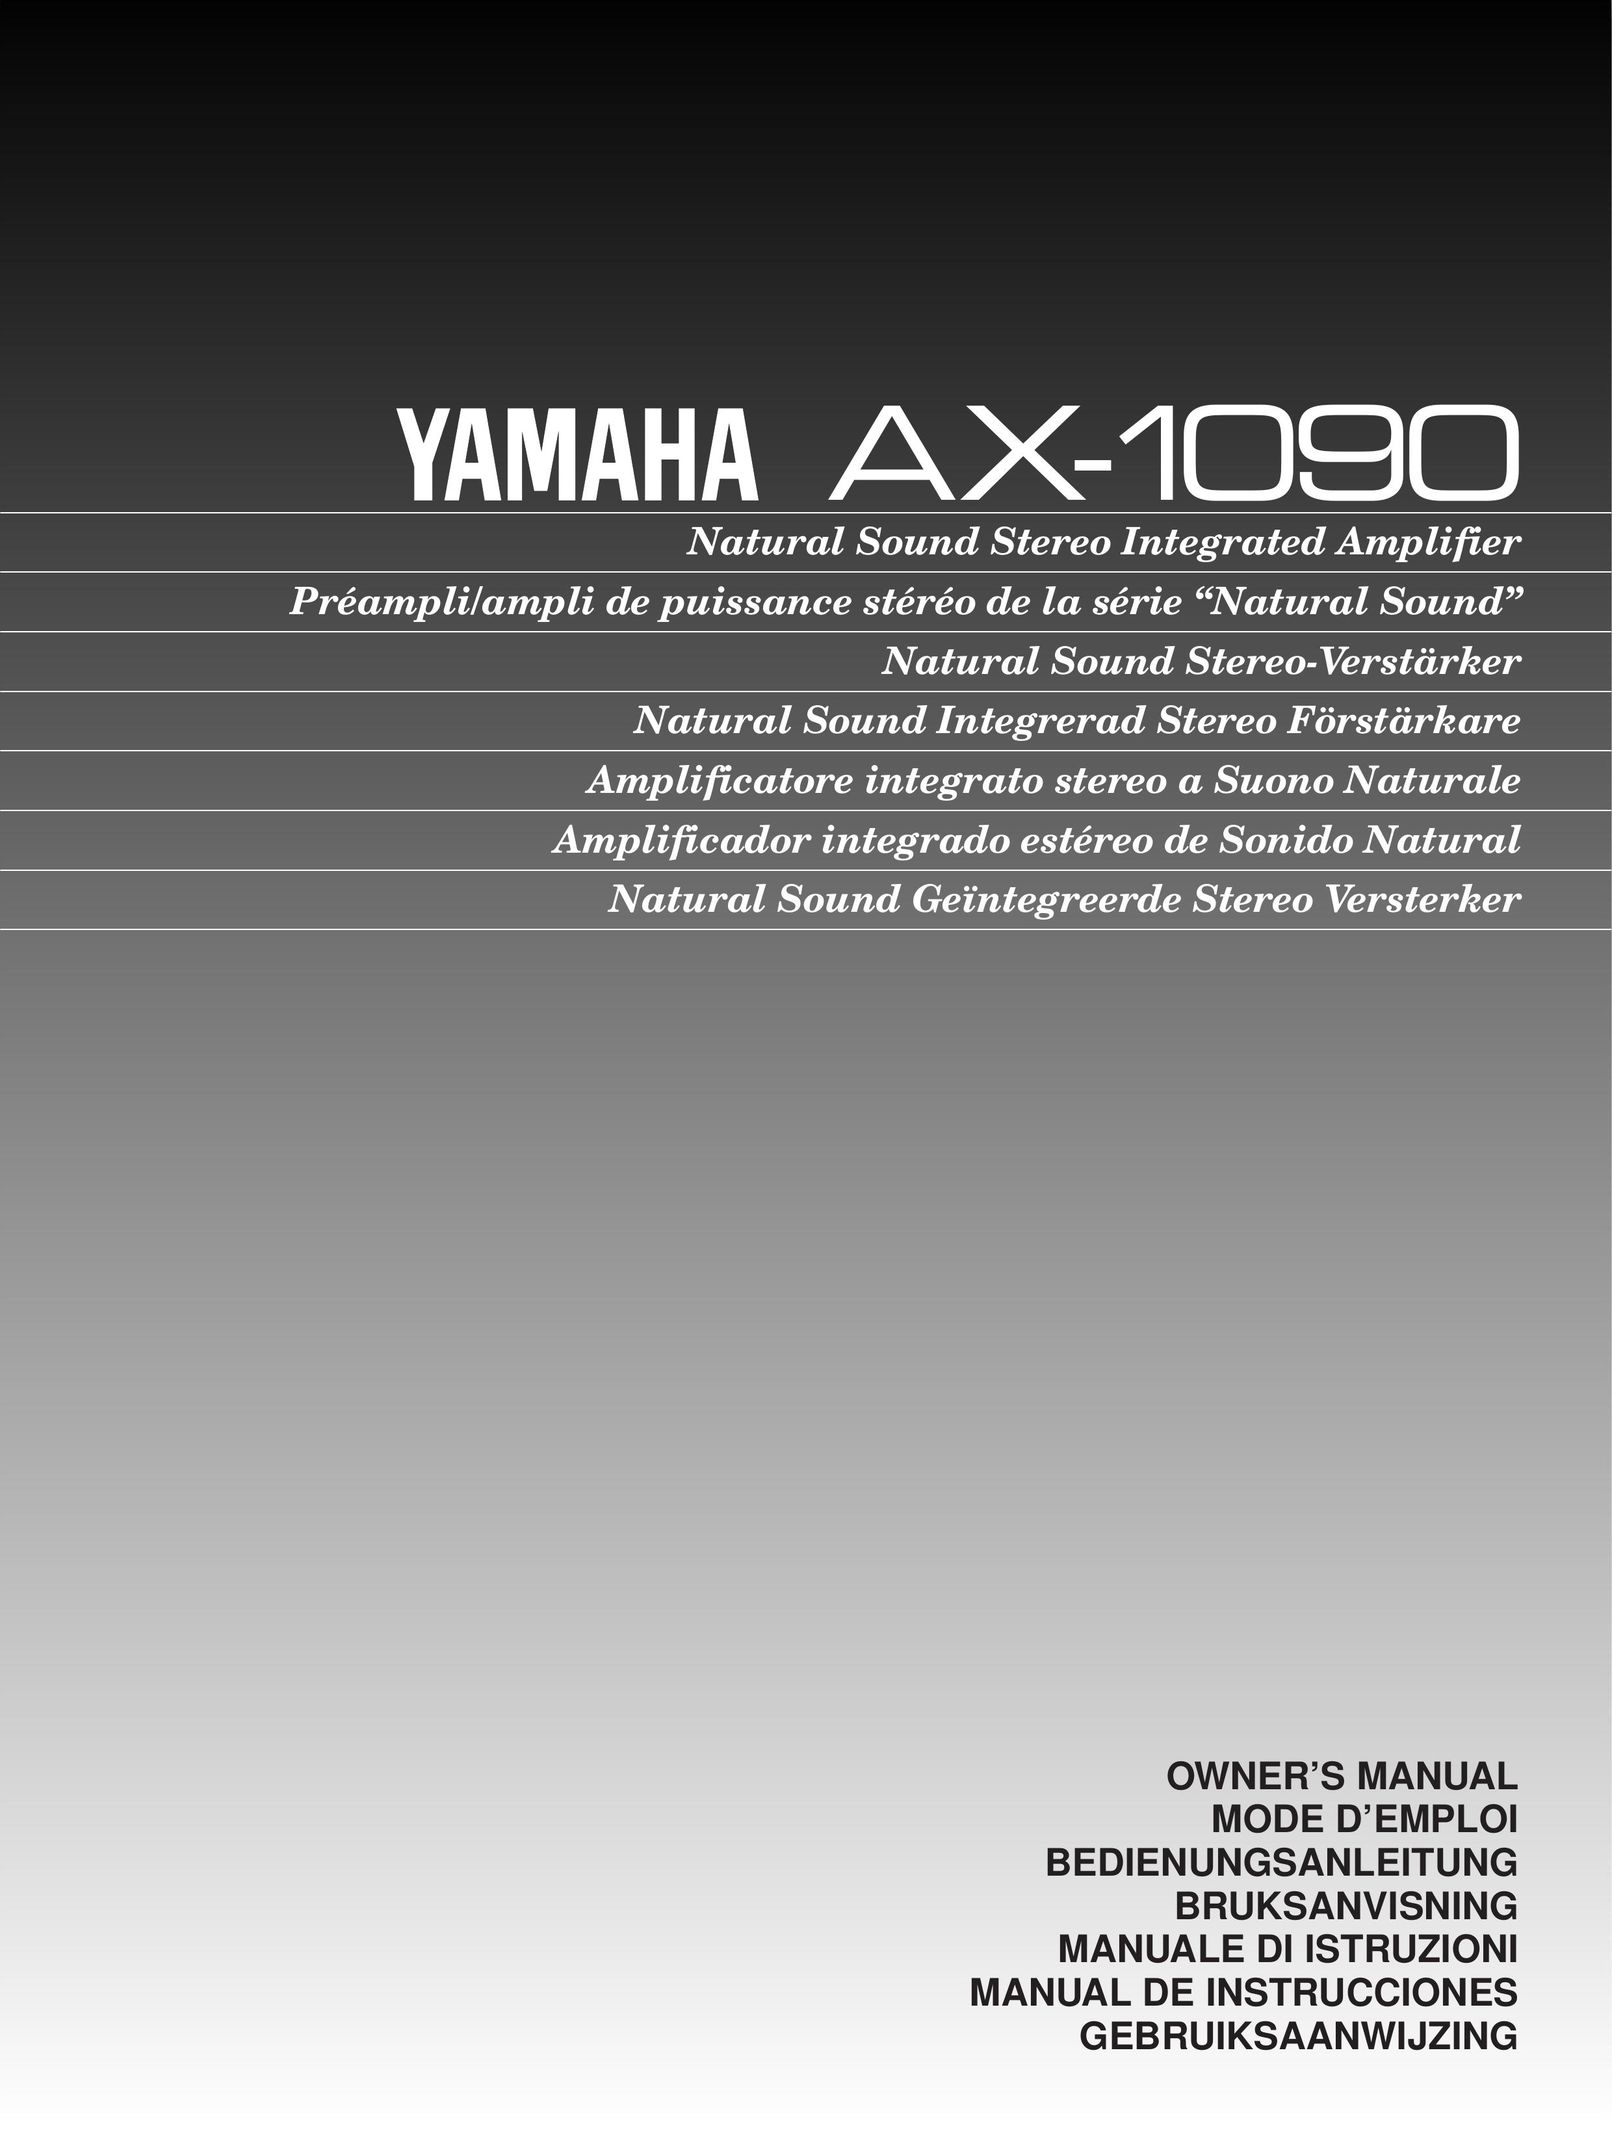 Yamaha AX-1090 Stereo Amplifier User Manual